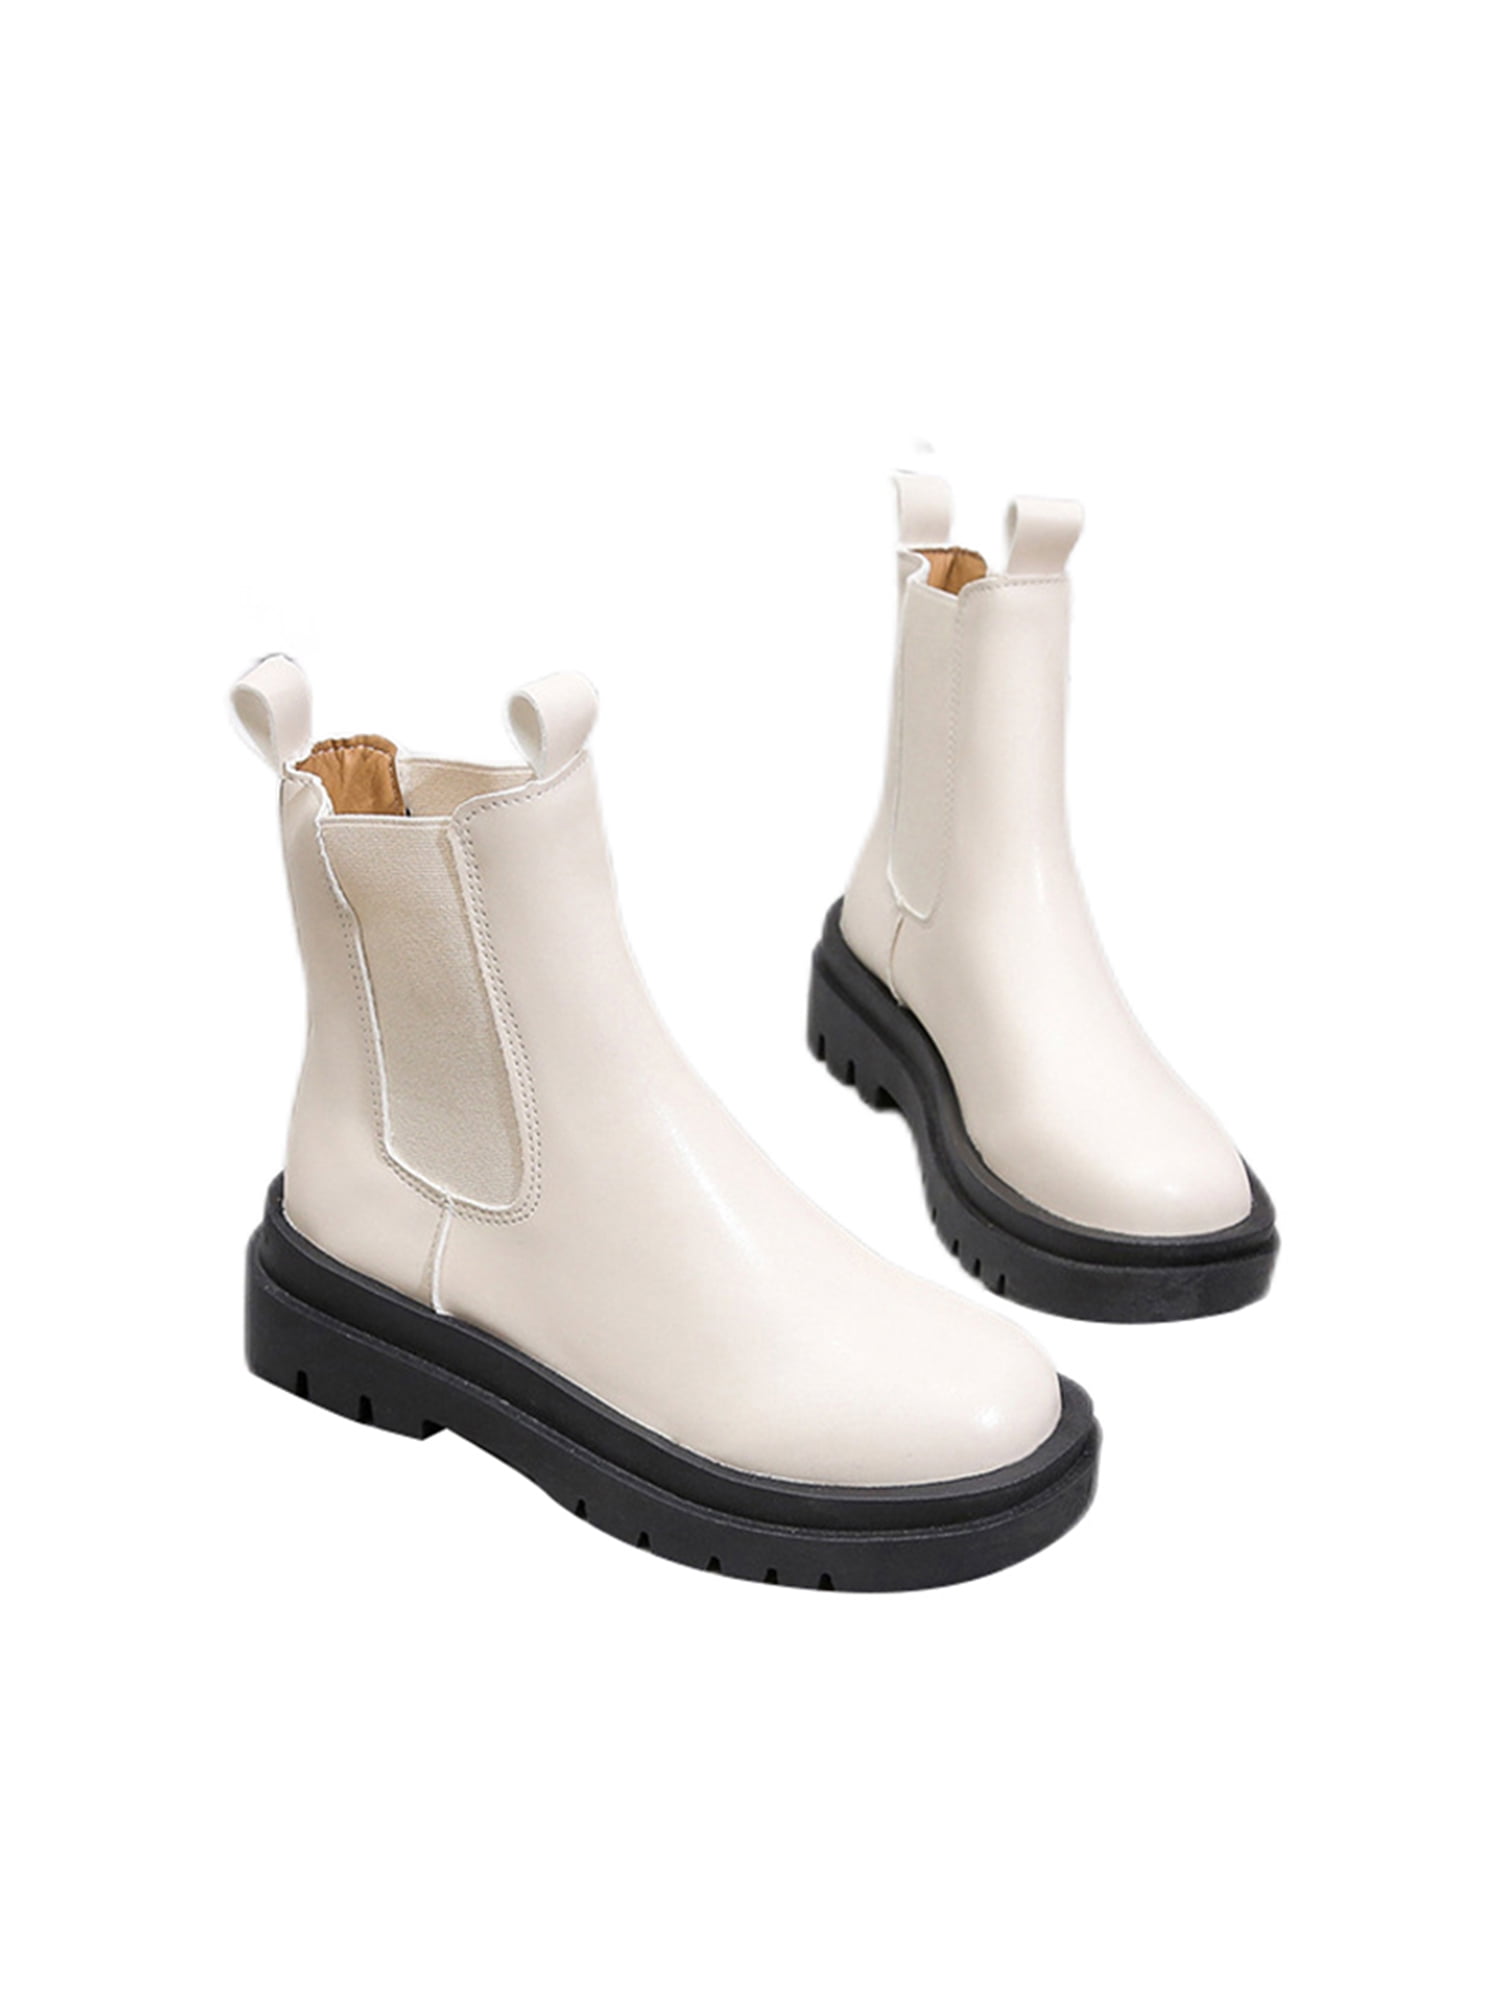 Avamo Womens Dress Anti Slip Heel Boots Office Waterproof Work Shoes Breathable White 5 - Walmart.com